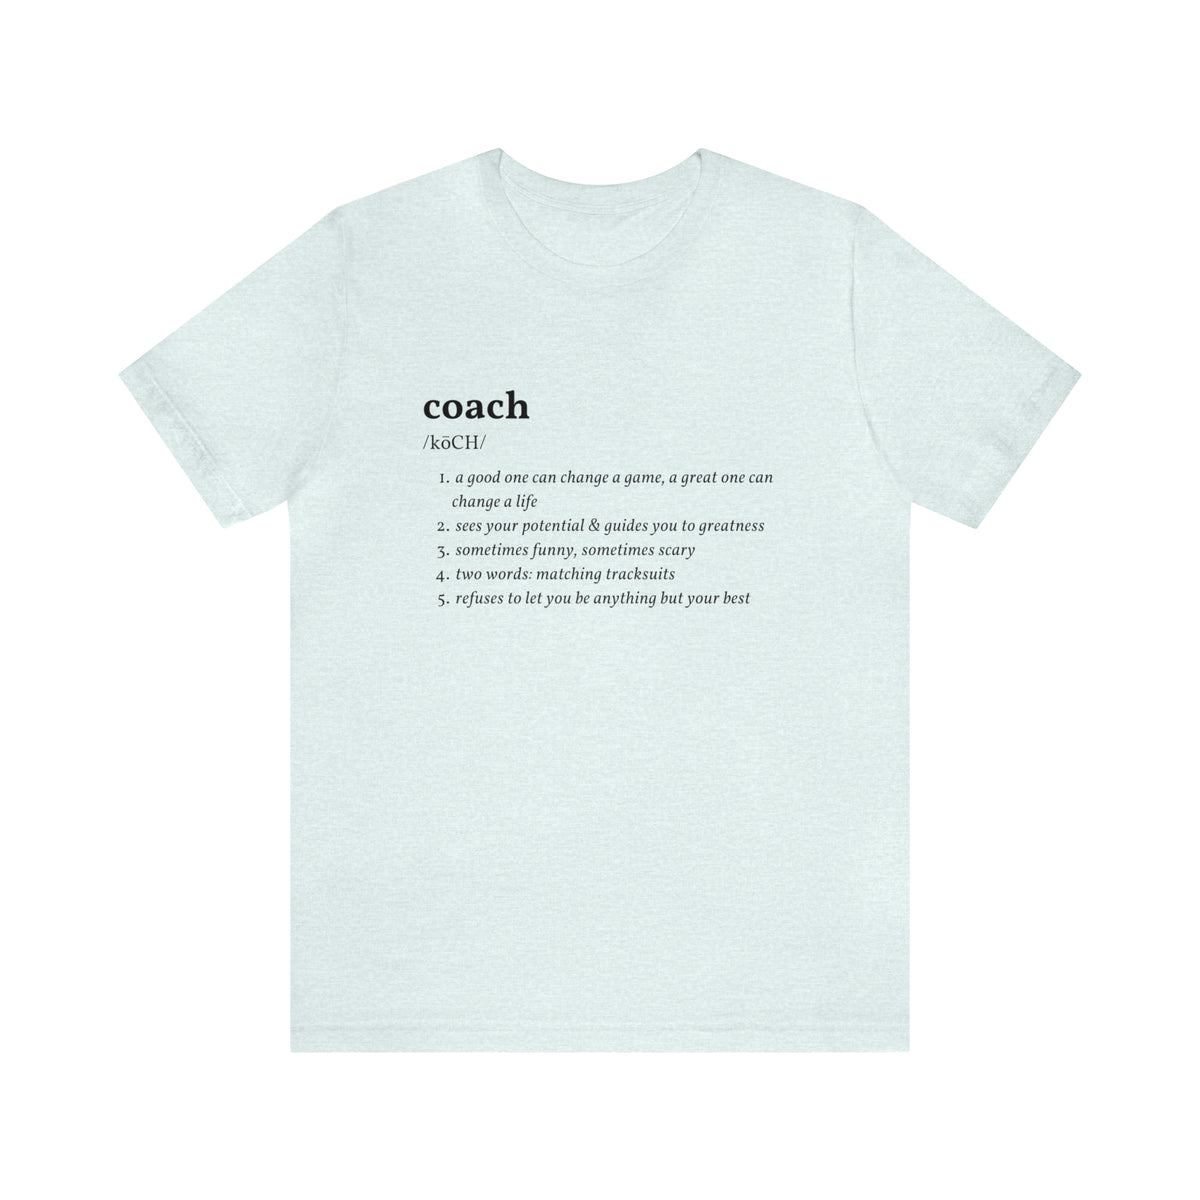 Coach Definition Adult T-Shirt